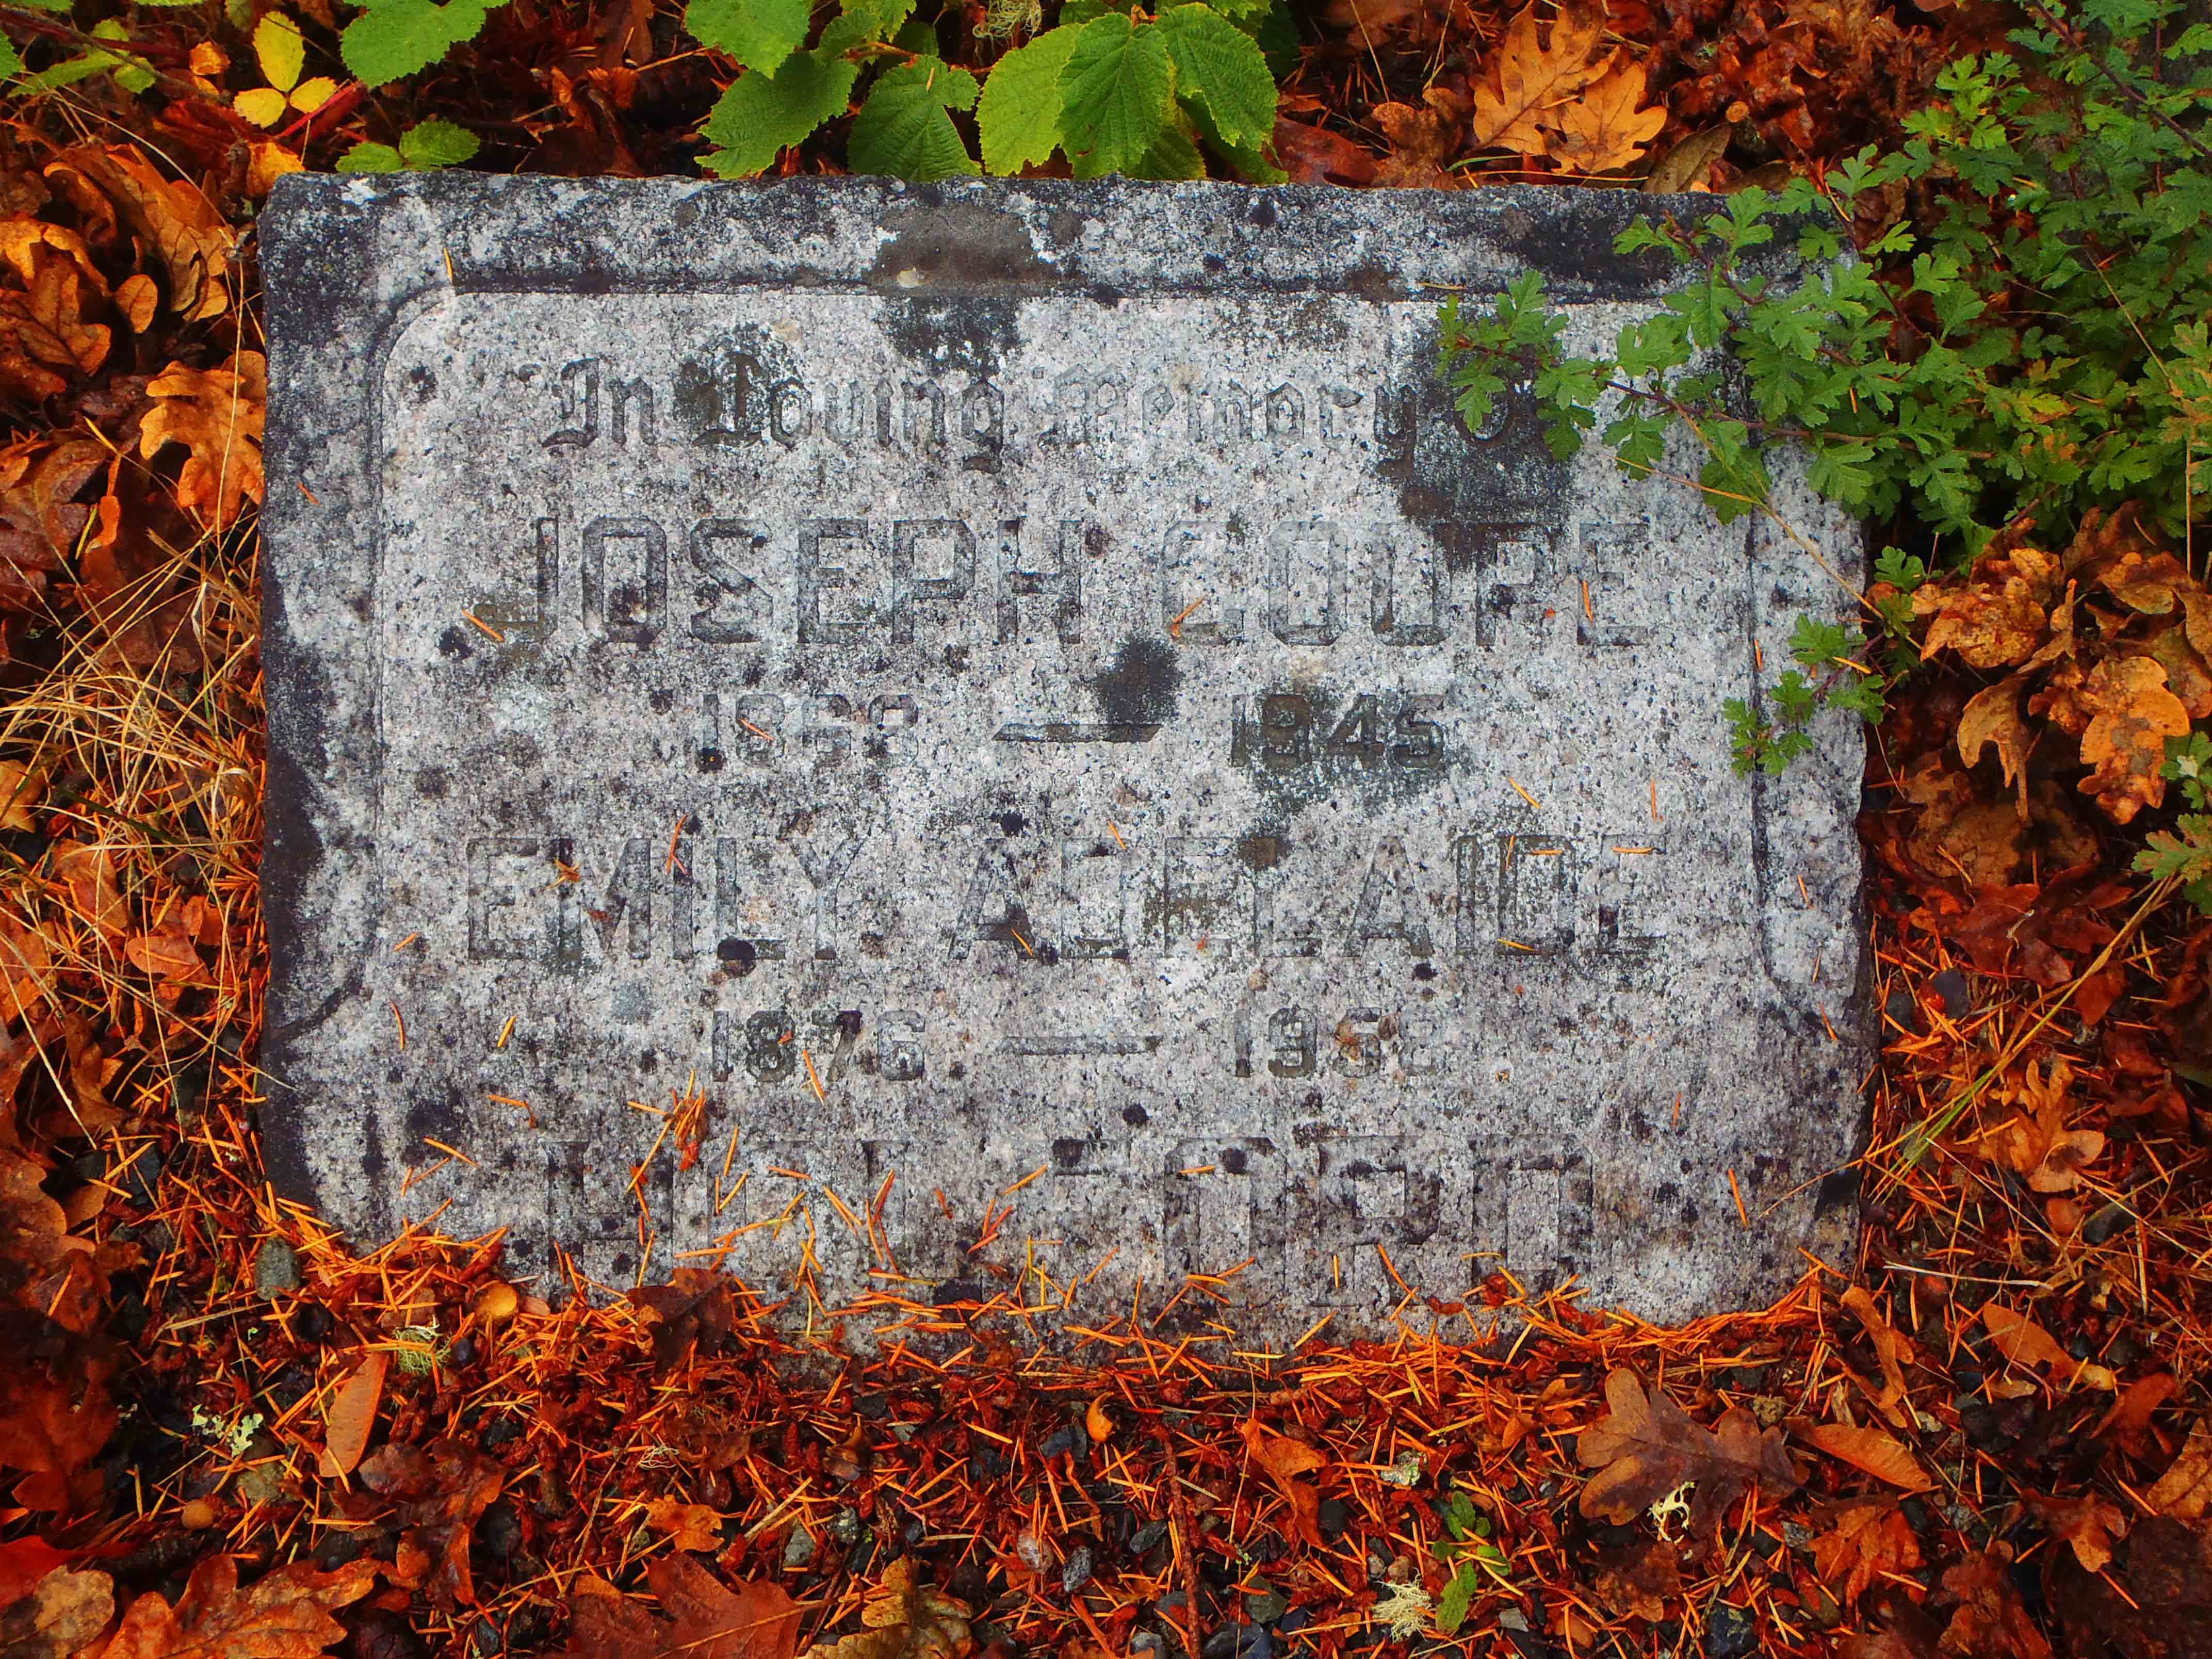 Joseph Coupe Holford gravestone